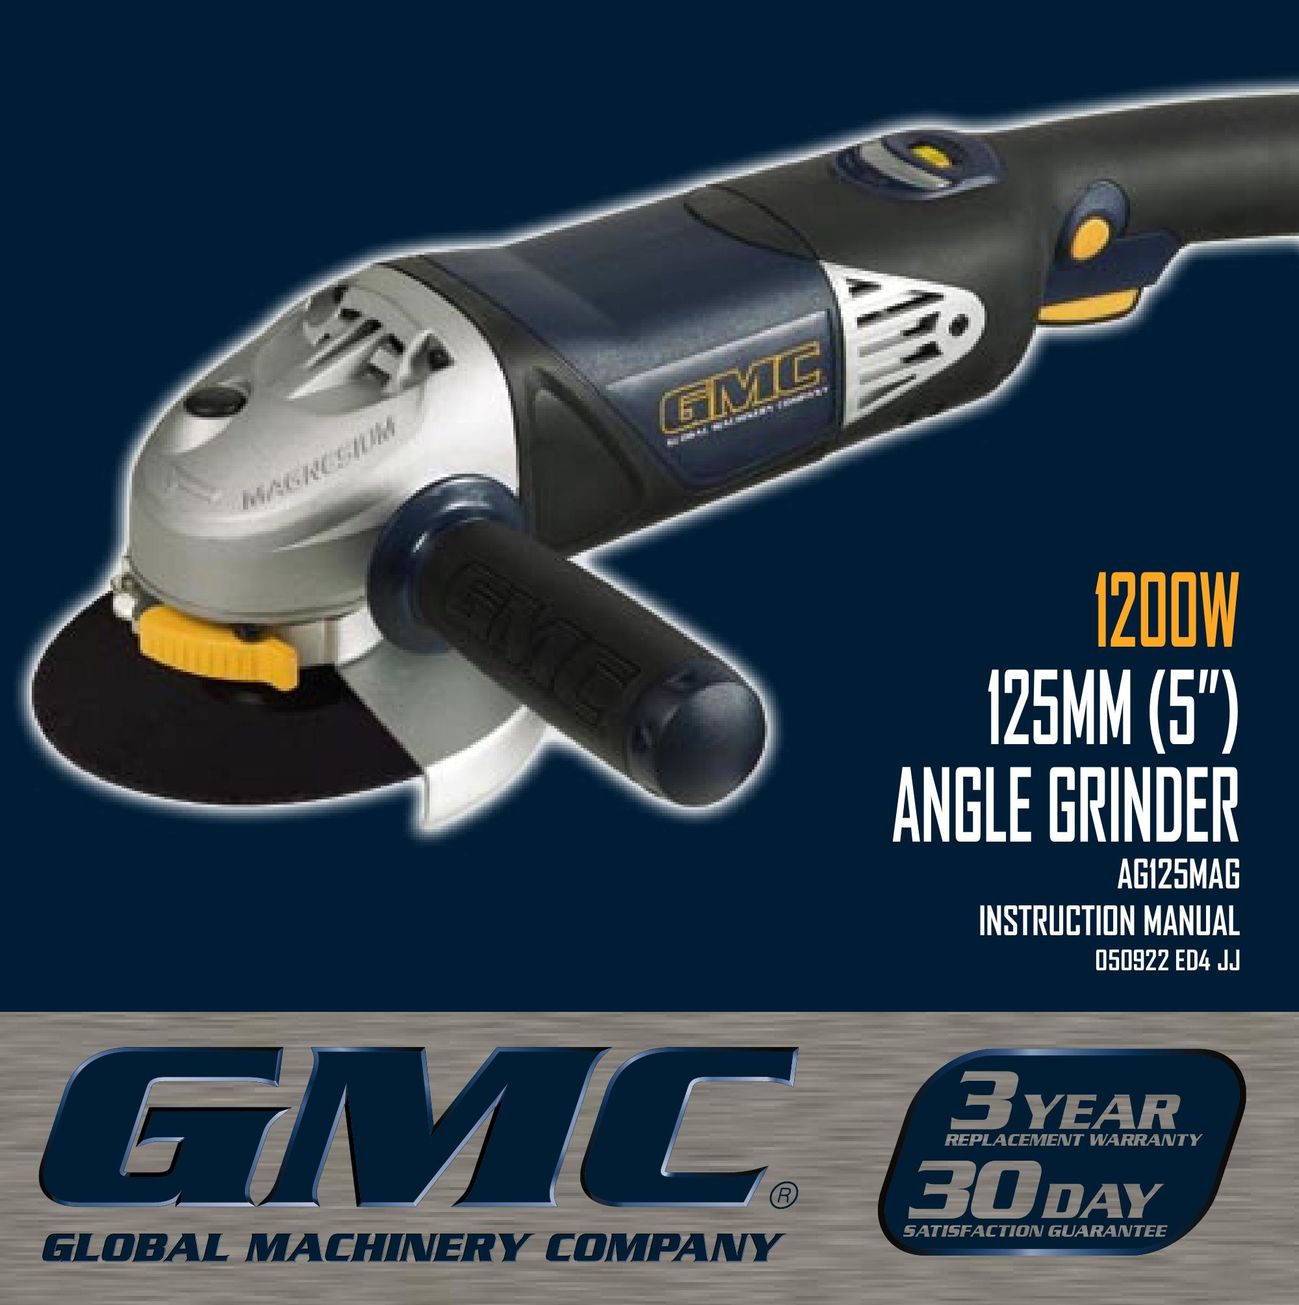 Global Machinery Company AG125MAG Grinder User Manual